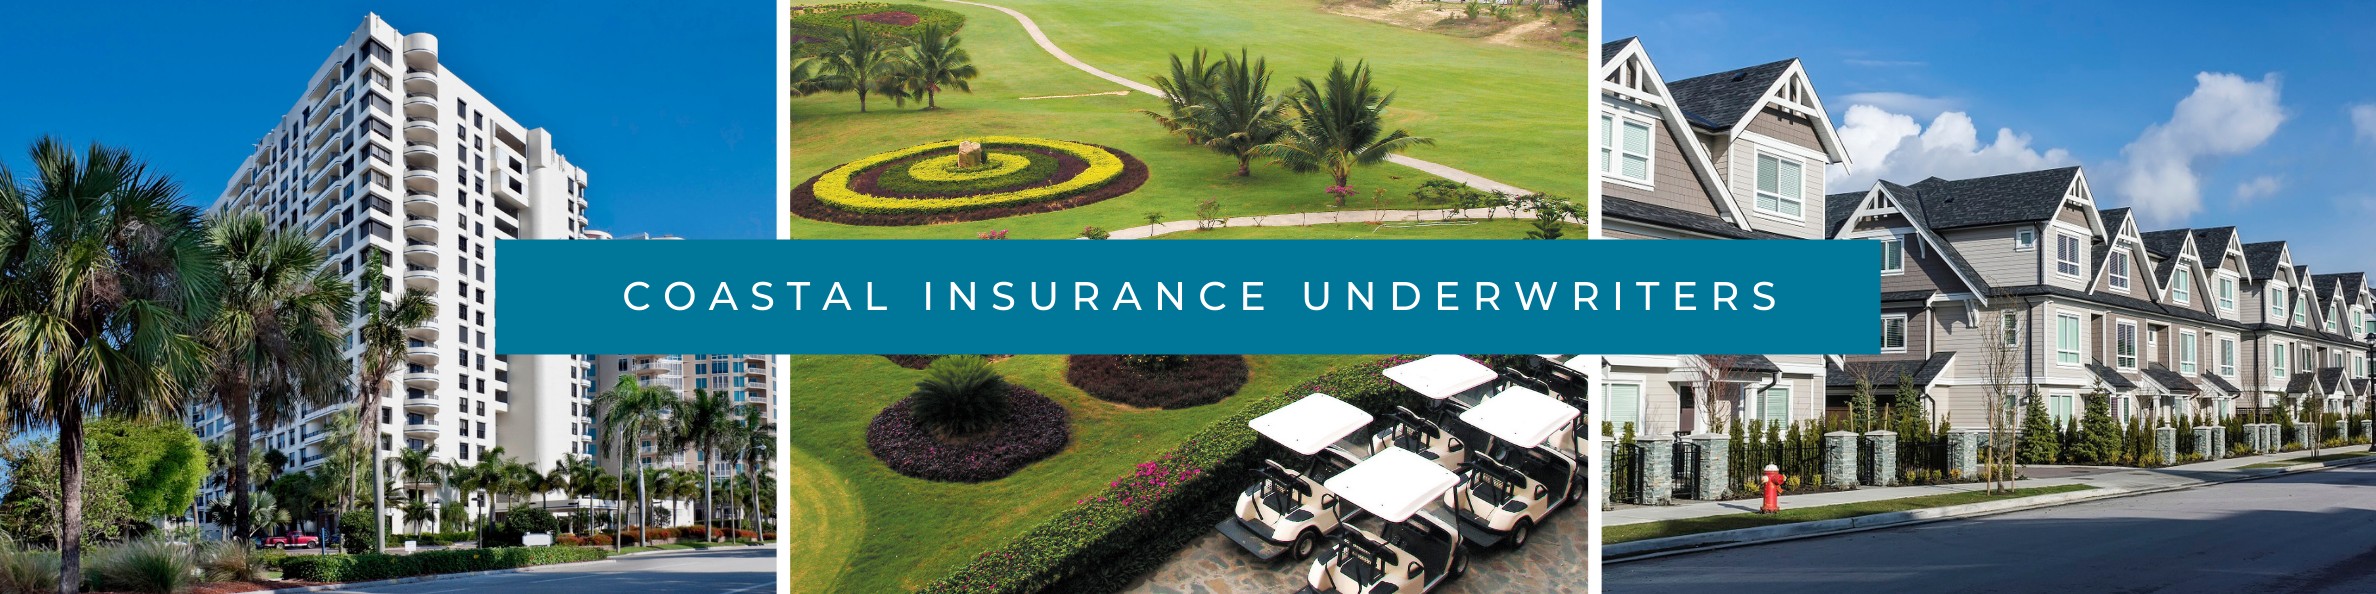 Coastal Insurance Underwriters Llc Linkedin